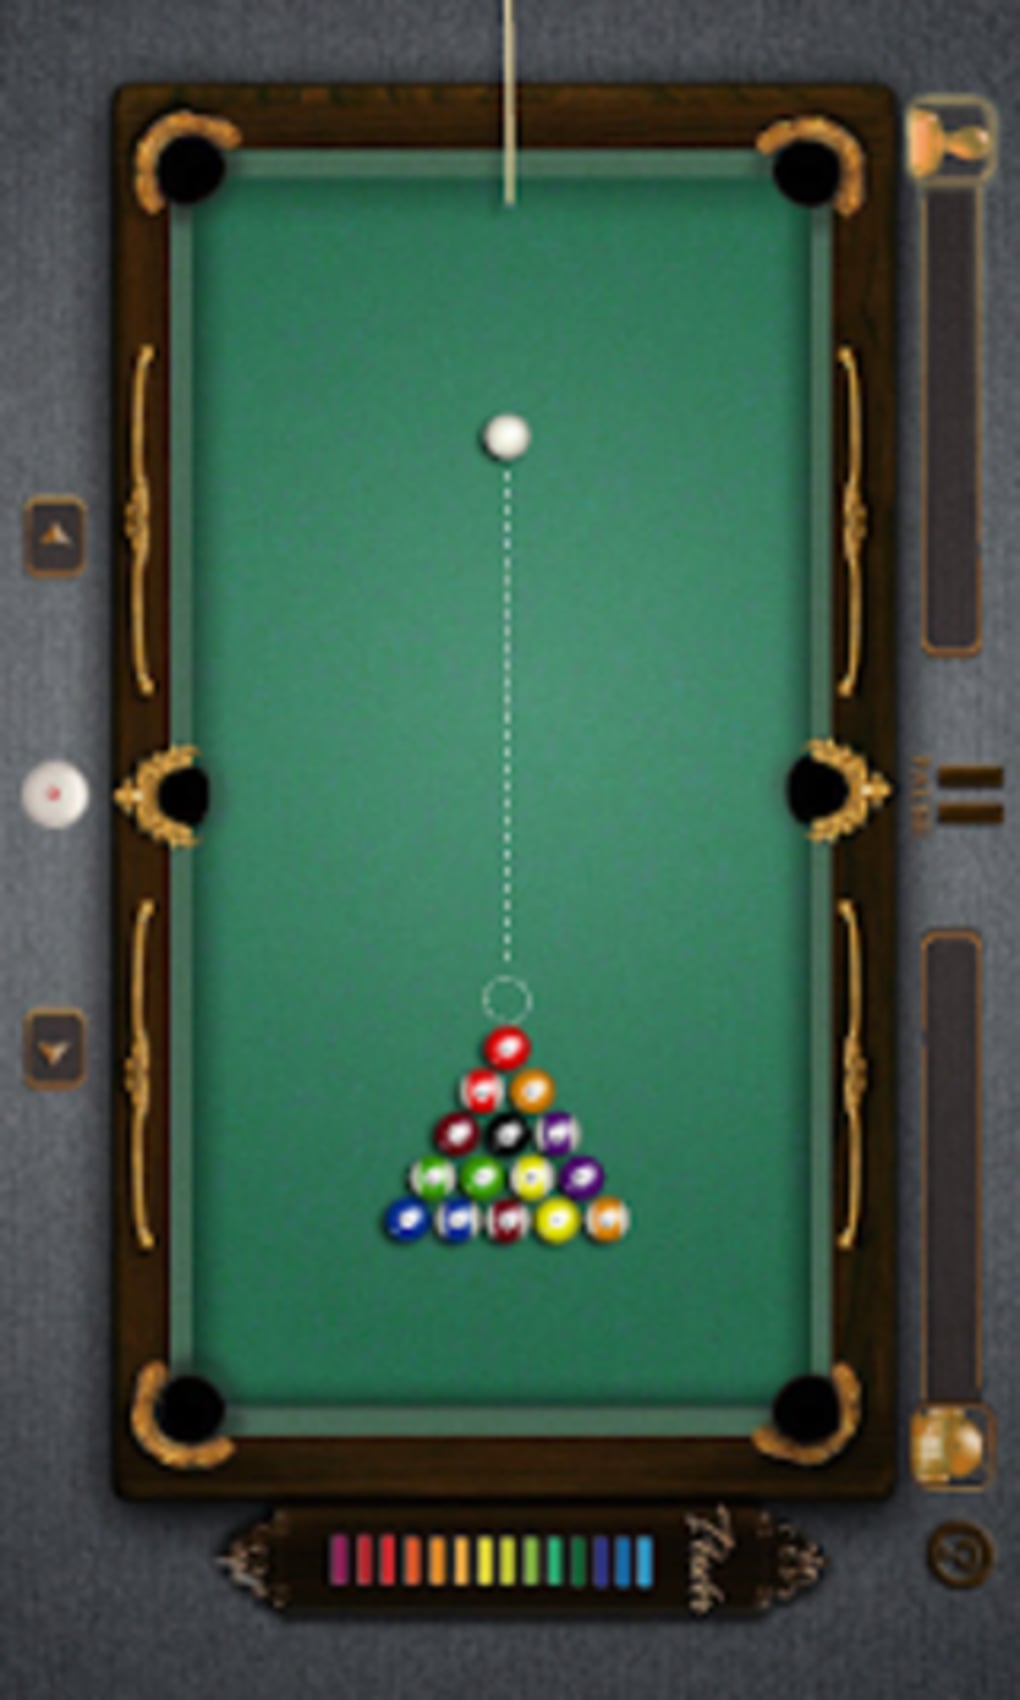 Bilhar - Pool Billiards Pro - Download do APK para Android